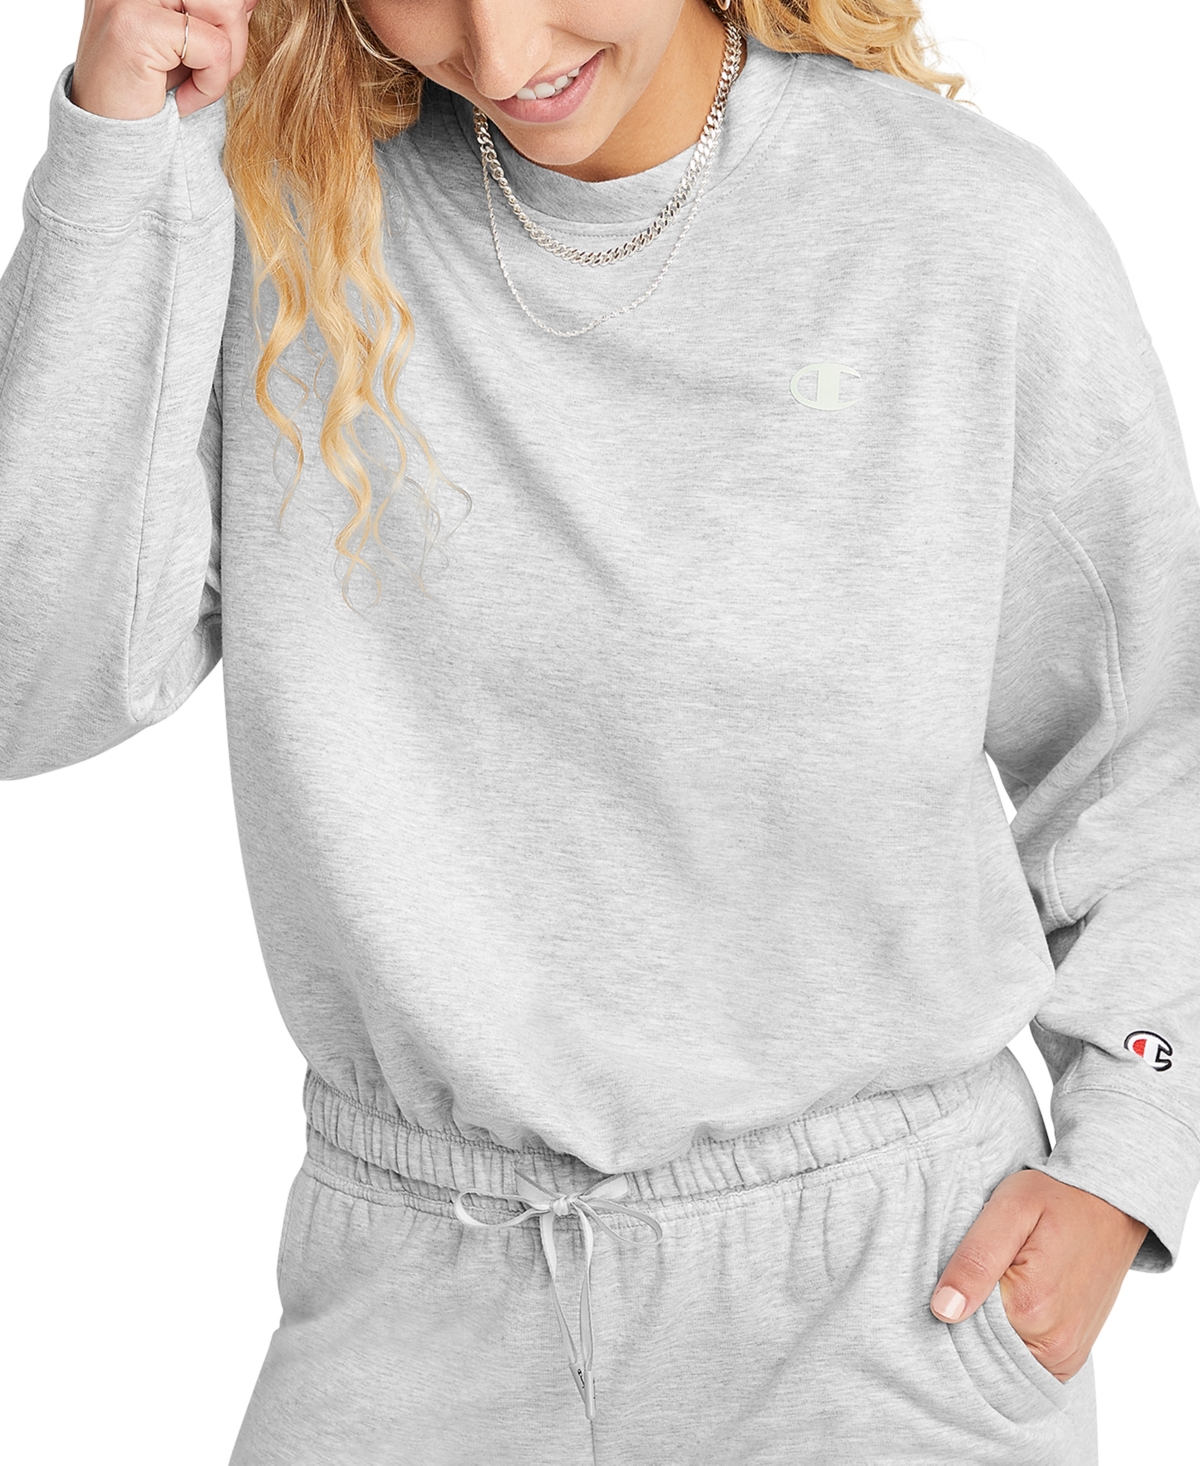  Champion Women's Soft Touch Fleece Sweatshirt